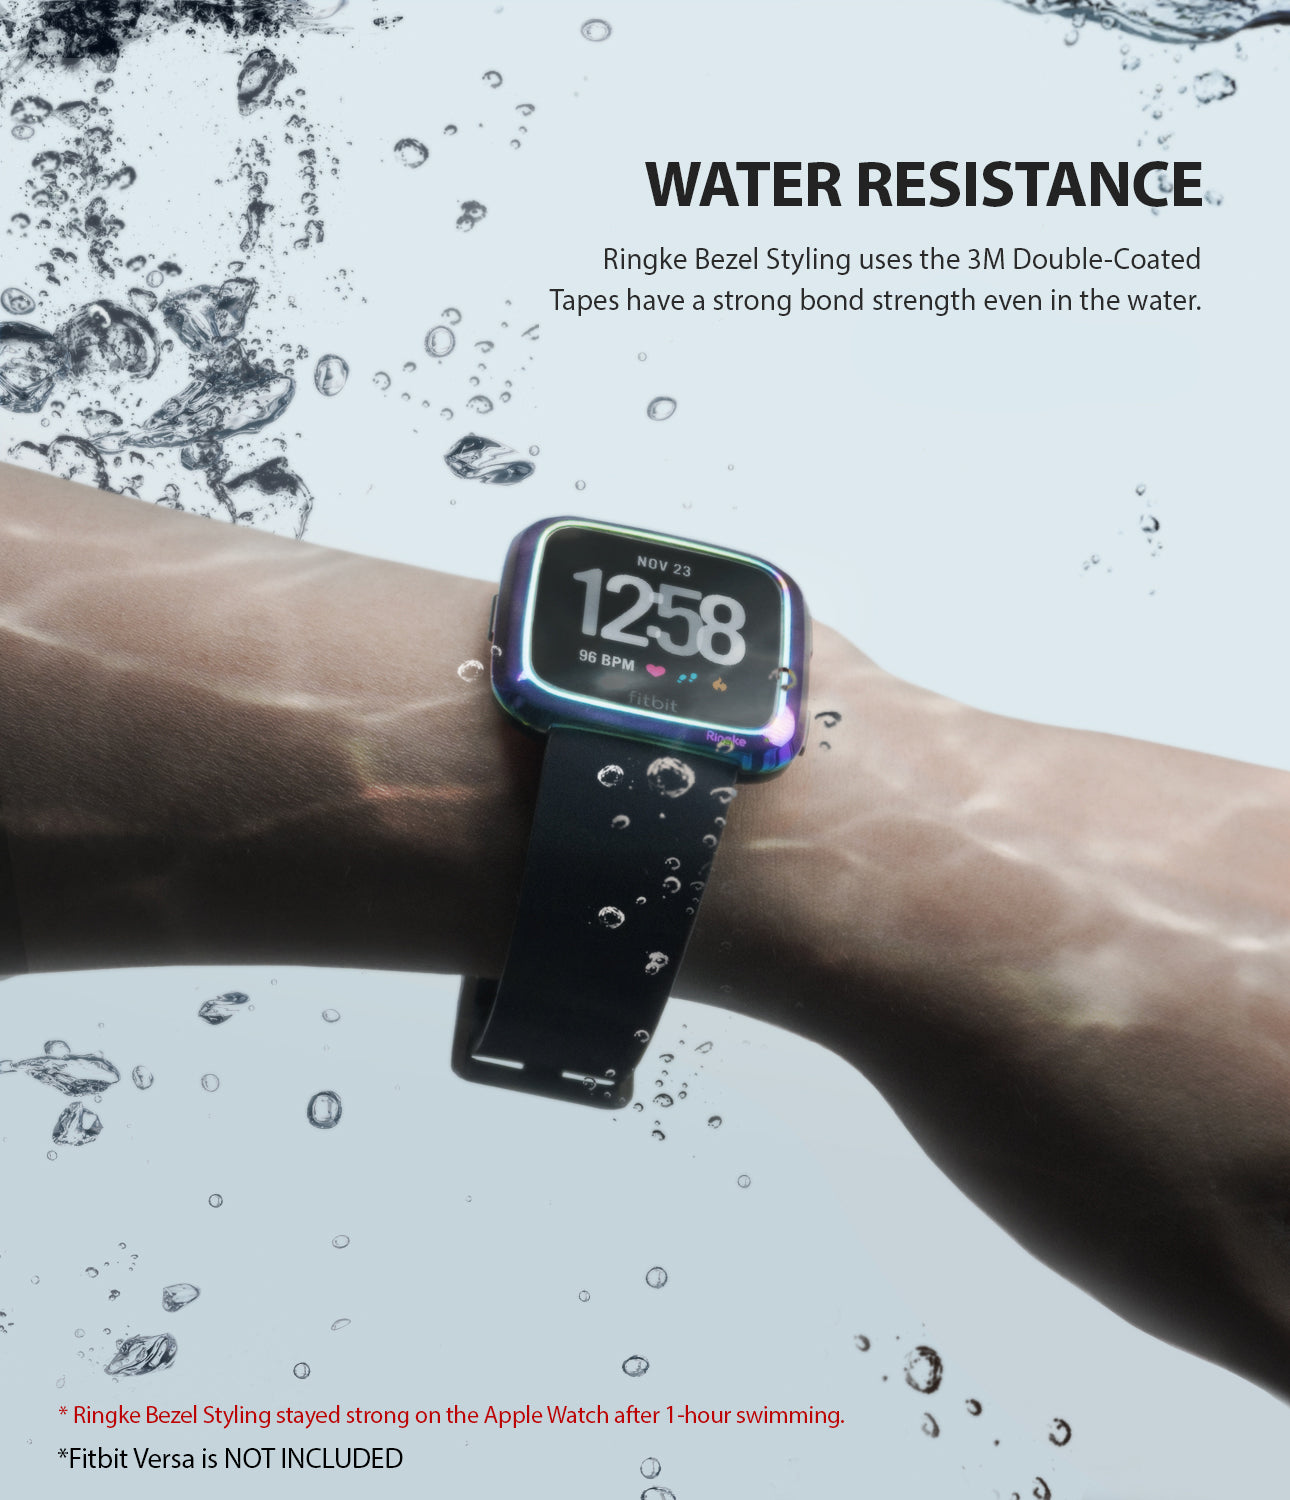 Ringke Bezel Styling Designed for Fitbit Versa Case Cover, Silver- FW-V-09, water resistance